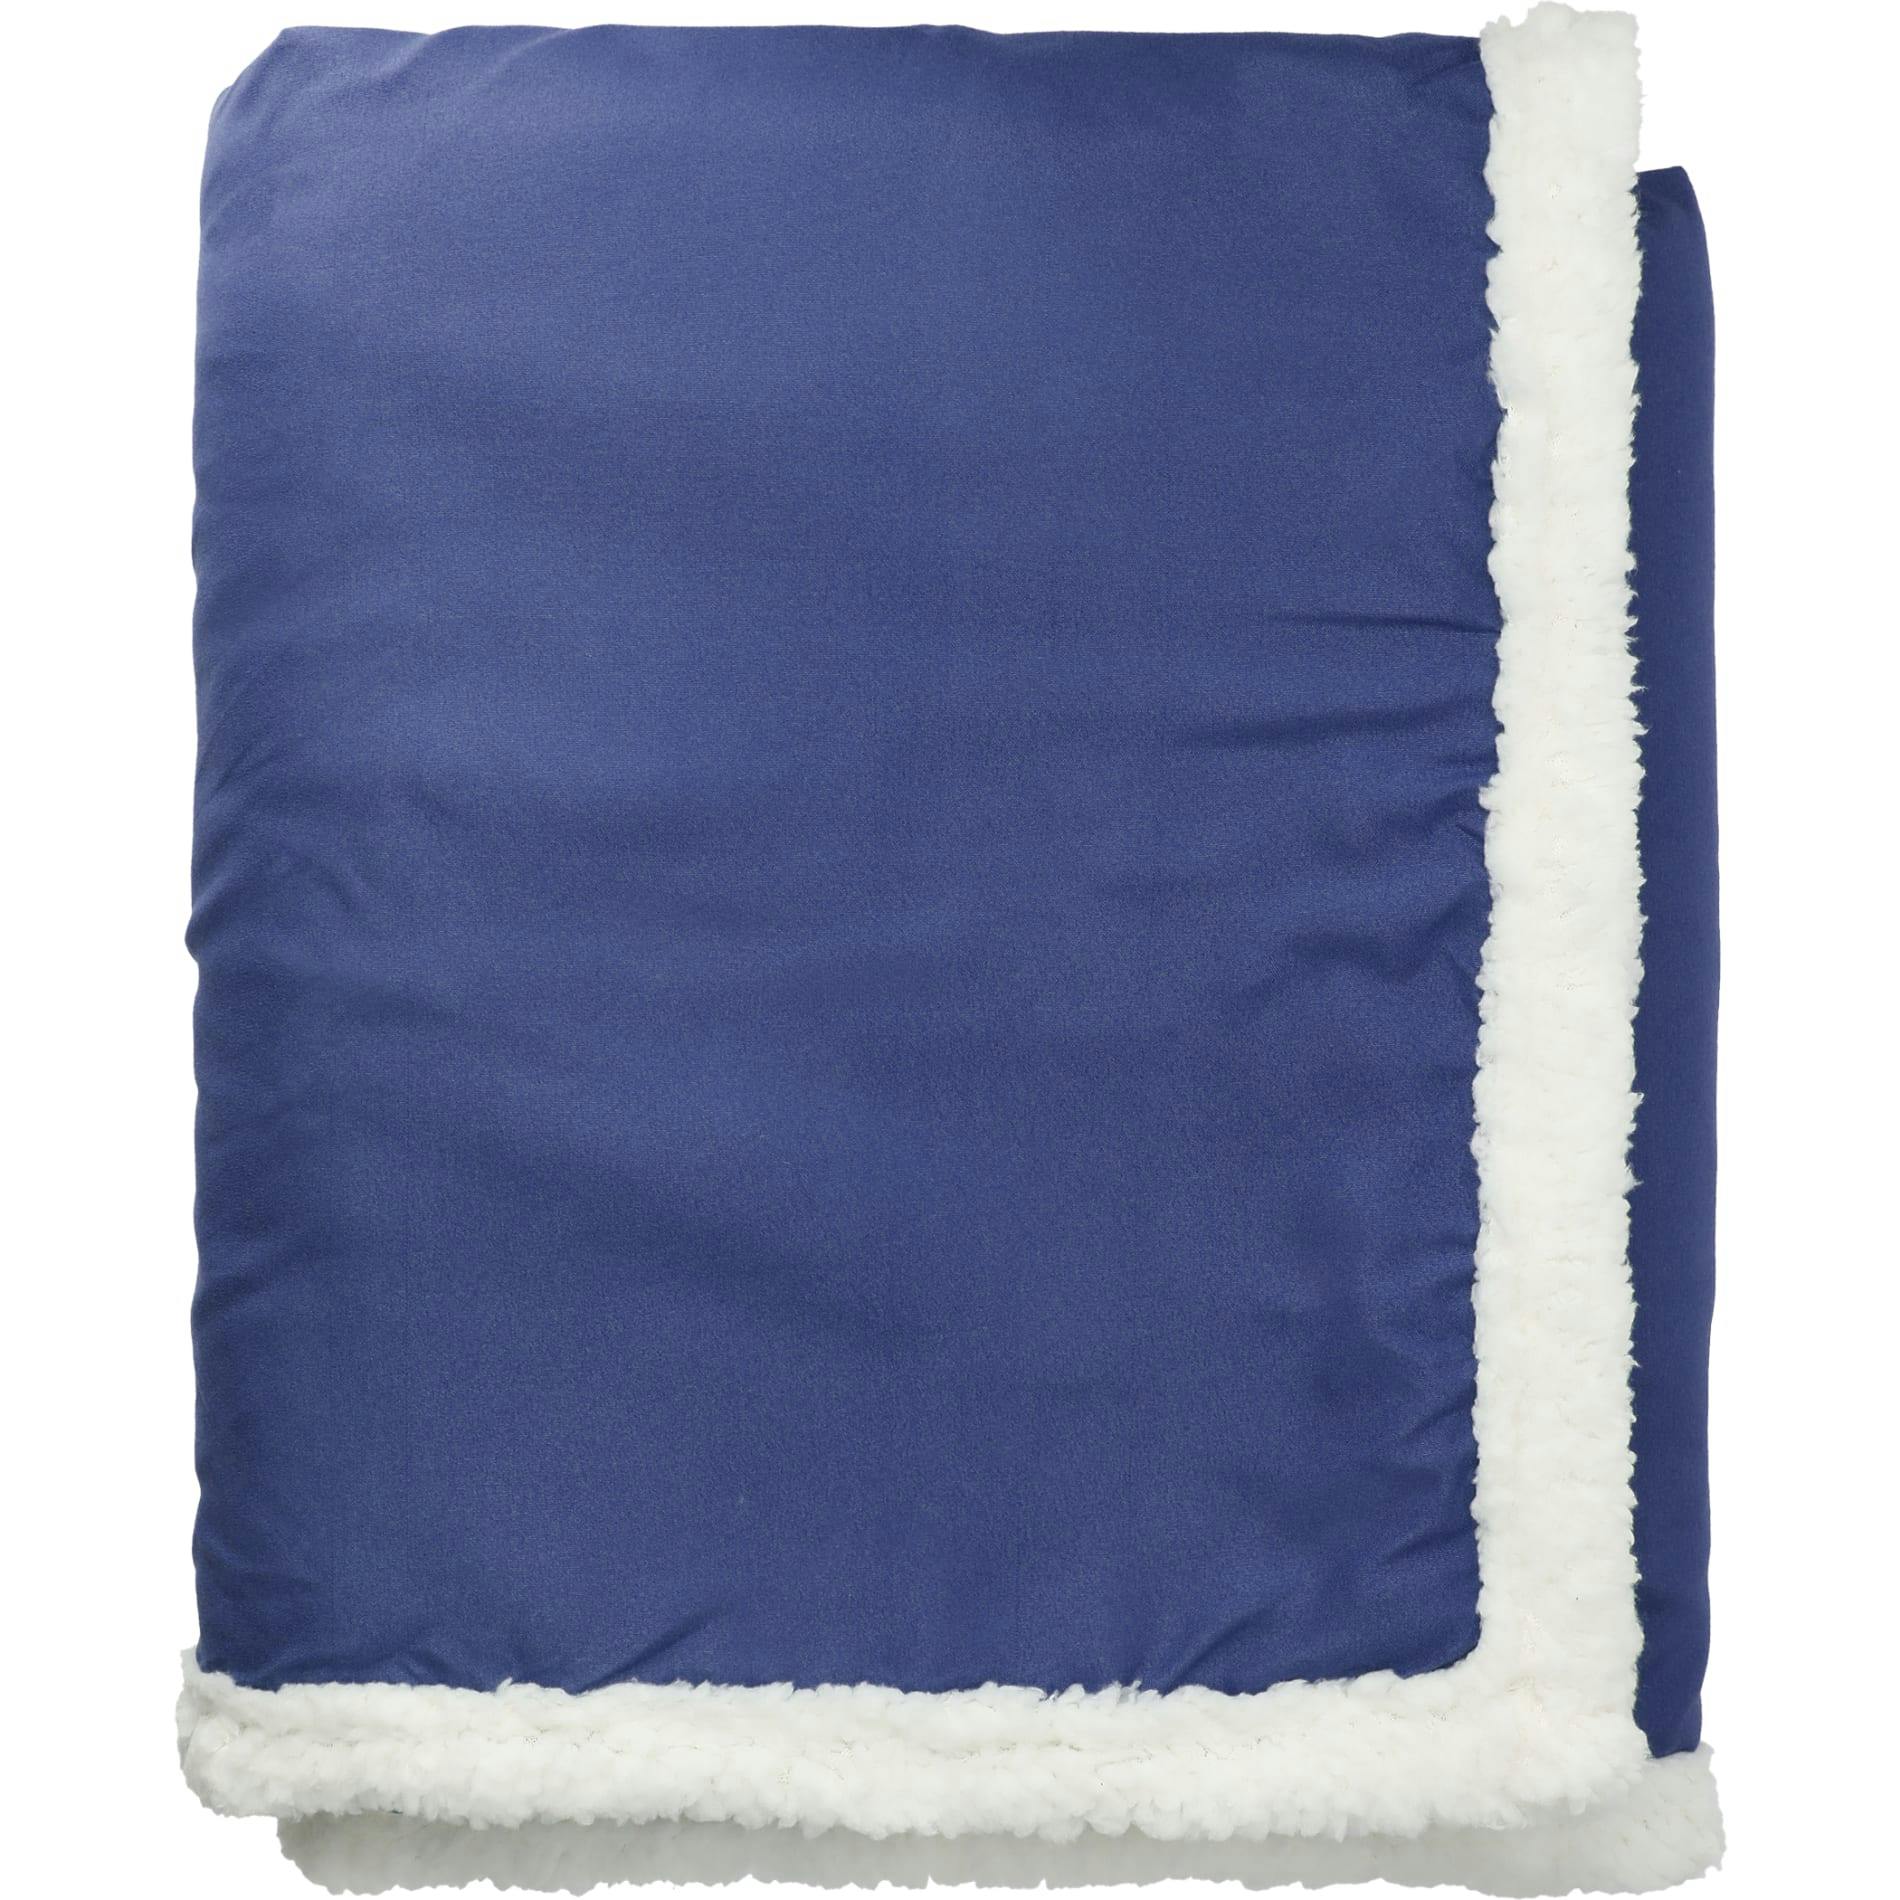 Sherpa Blanket - additional Image 3